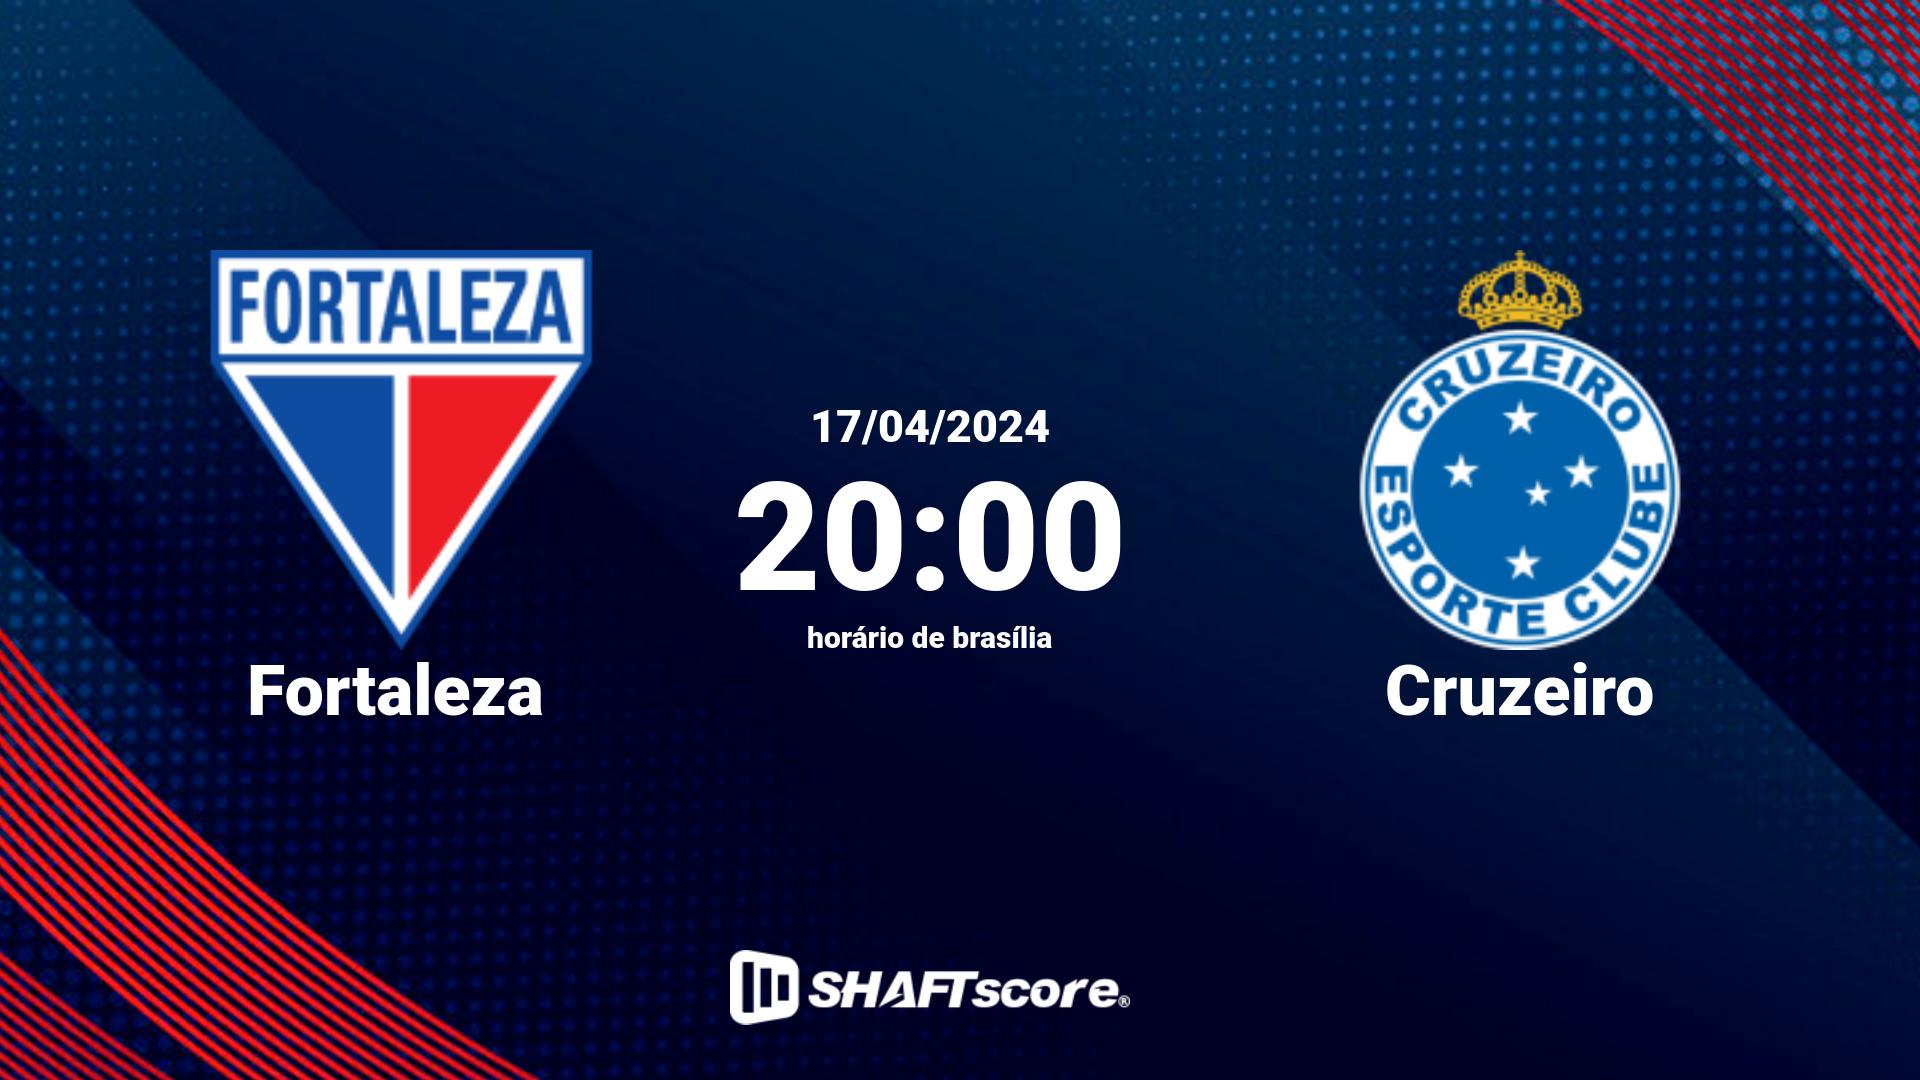 Estatísticas do jogo Fortaleza vs Cruzeiro 17.04 20:00